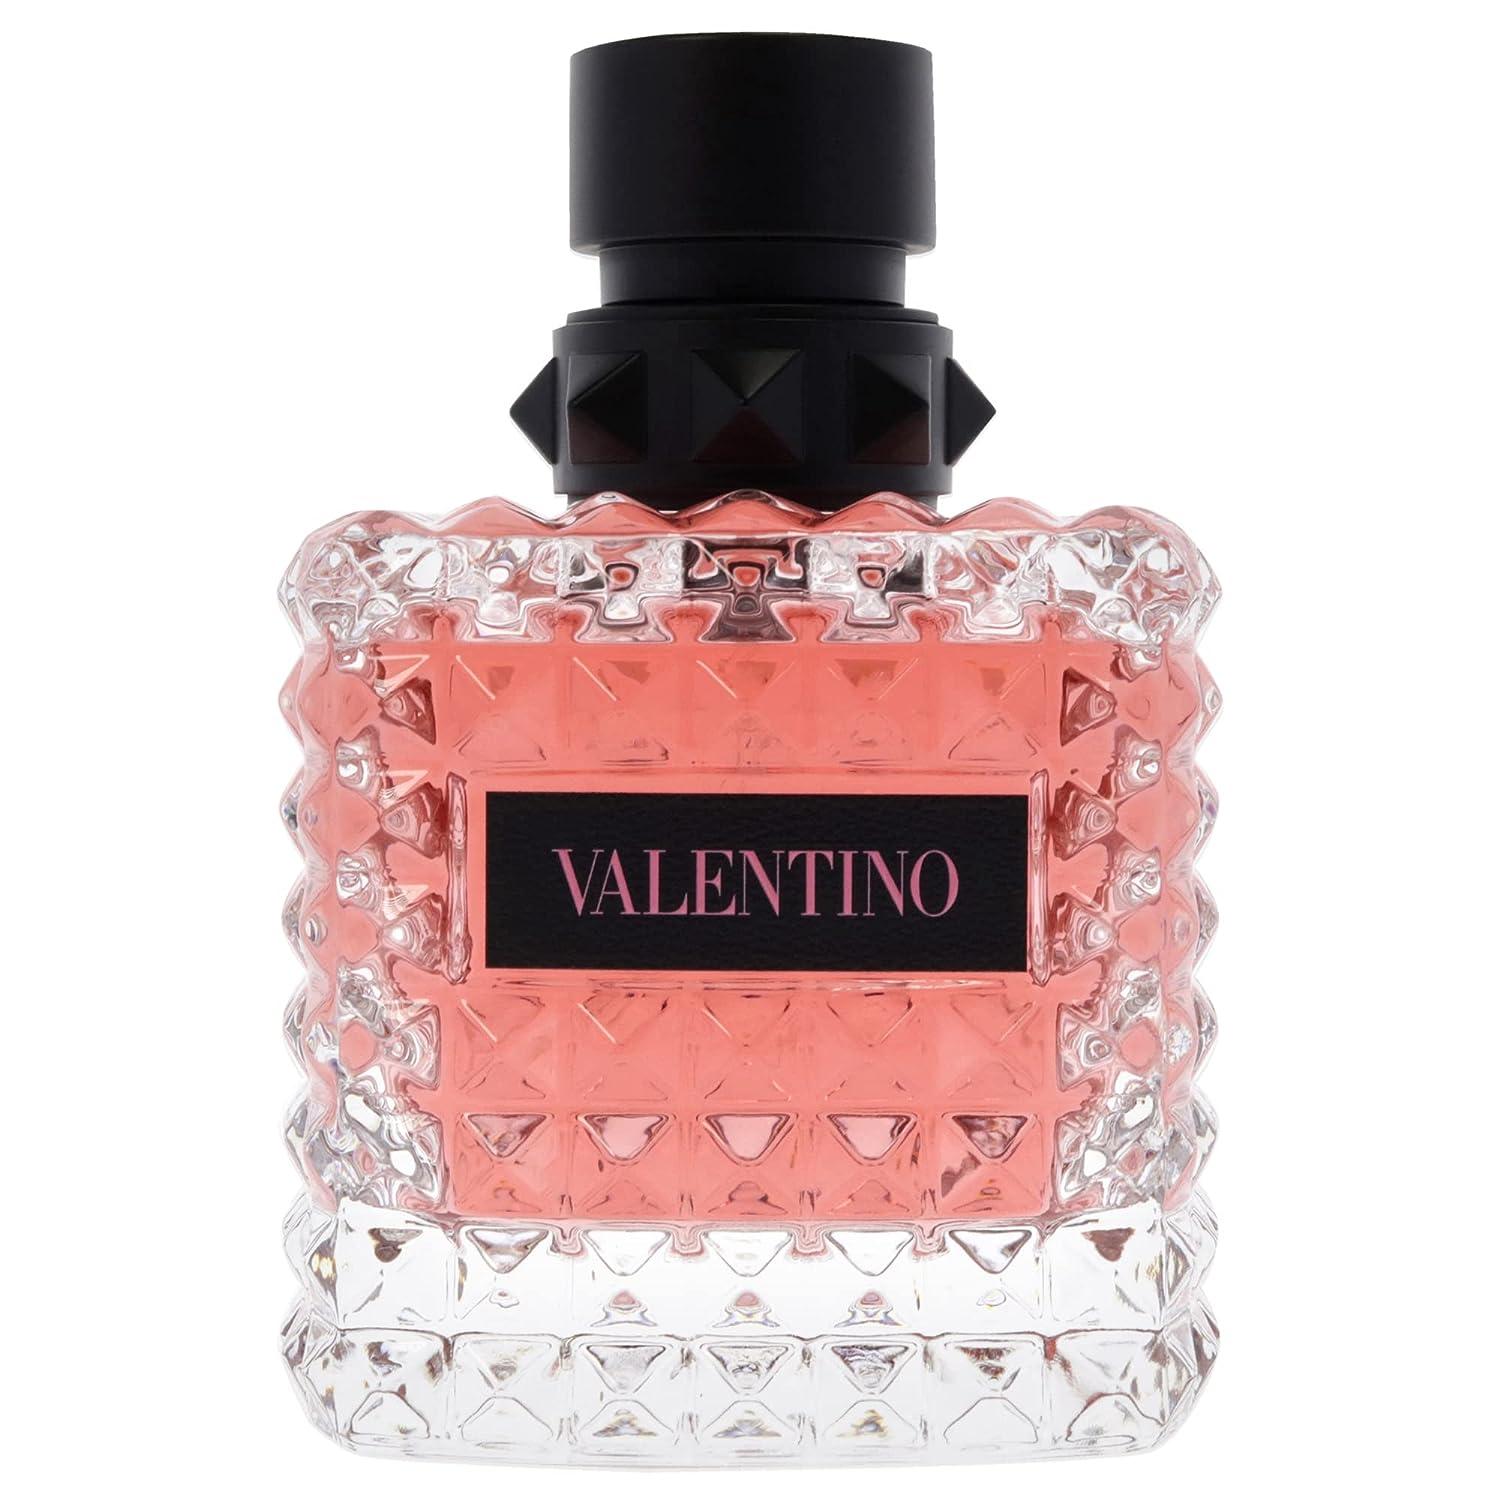 Valentino Donna Born in Roma Eau de Parfum Spray - 1 oz.